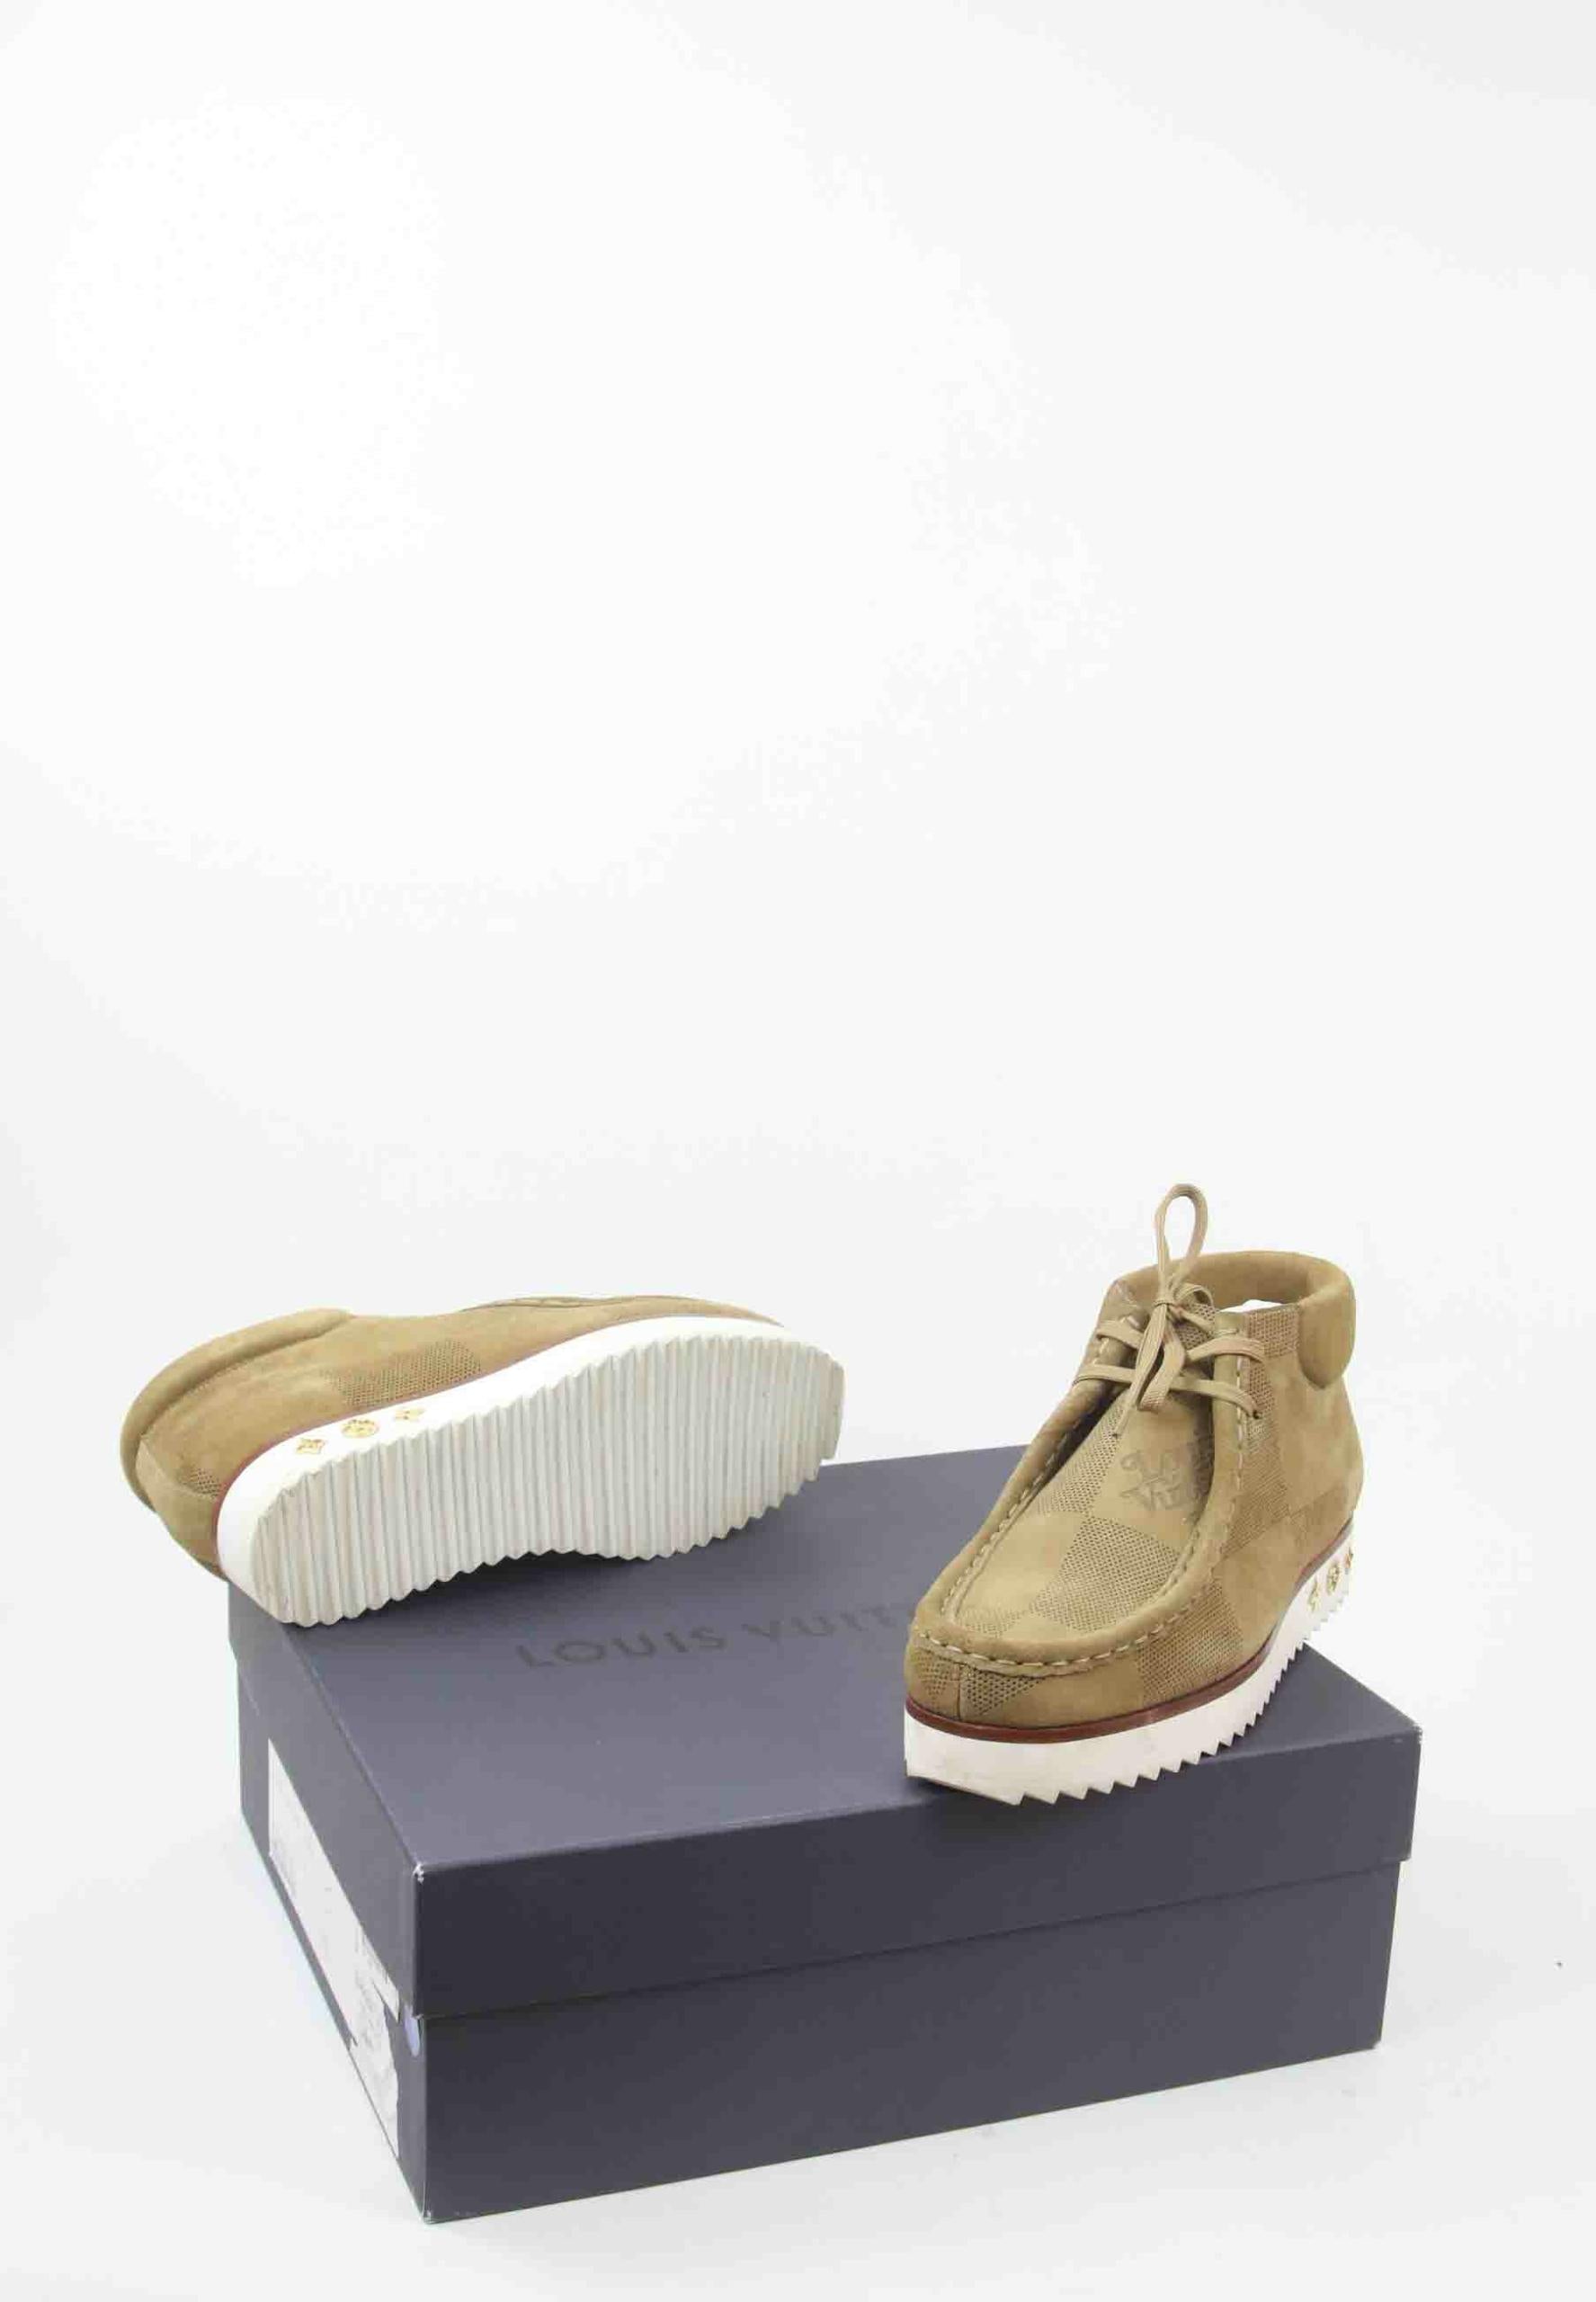 Chaussures Espadrilles Louis Vuitton Marine d'occasion